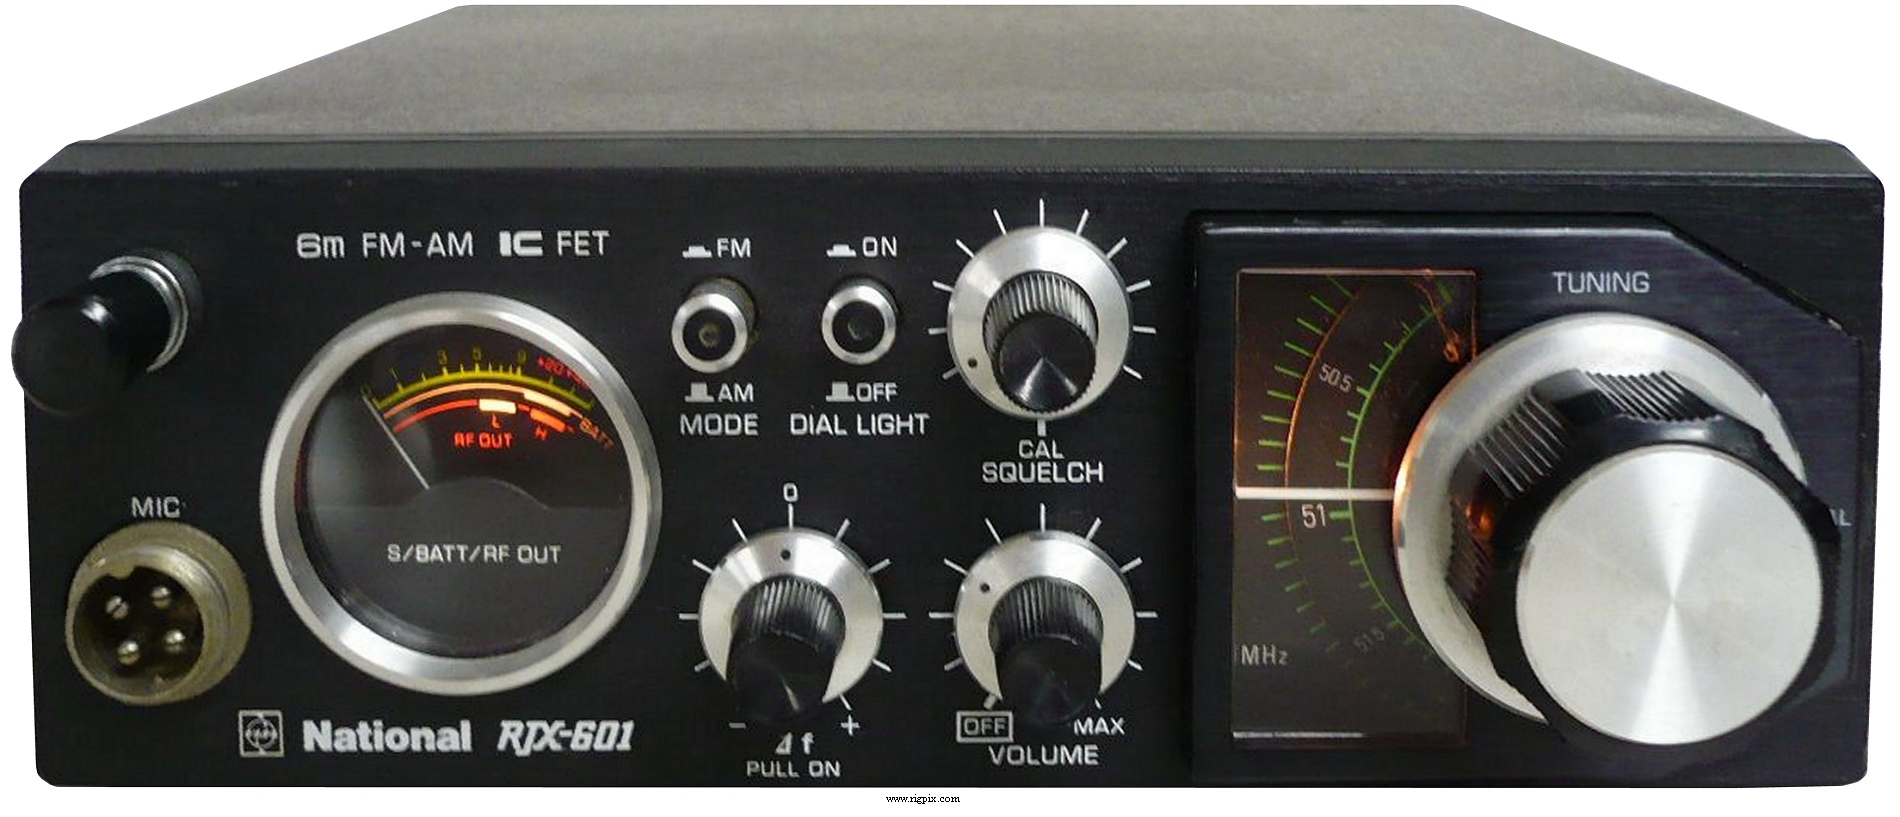 National RJX-601 AM/FM 50MHz トランシーバー